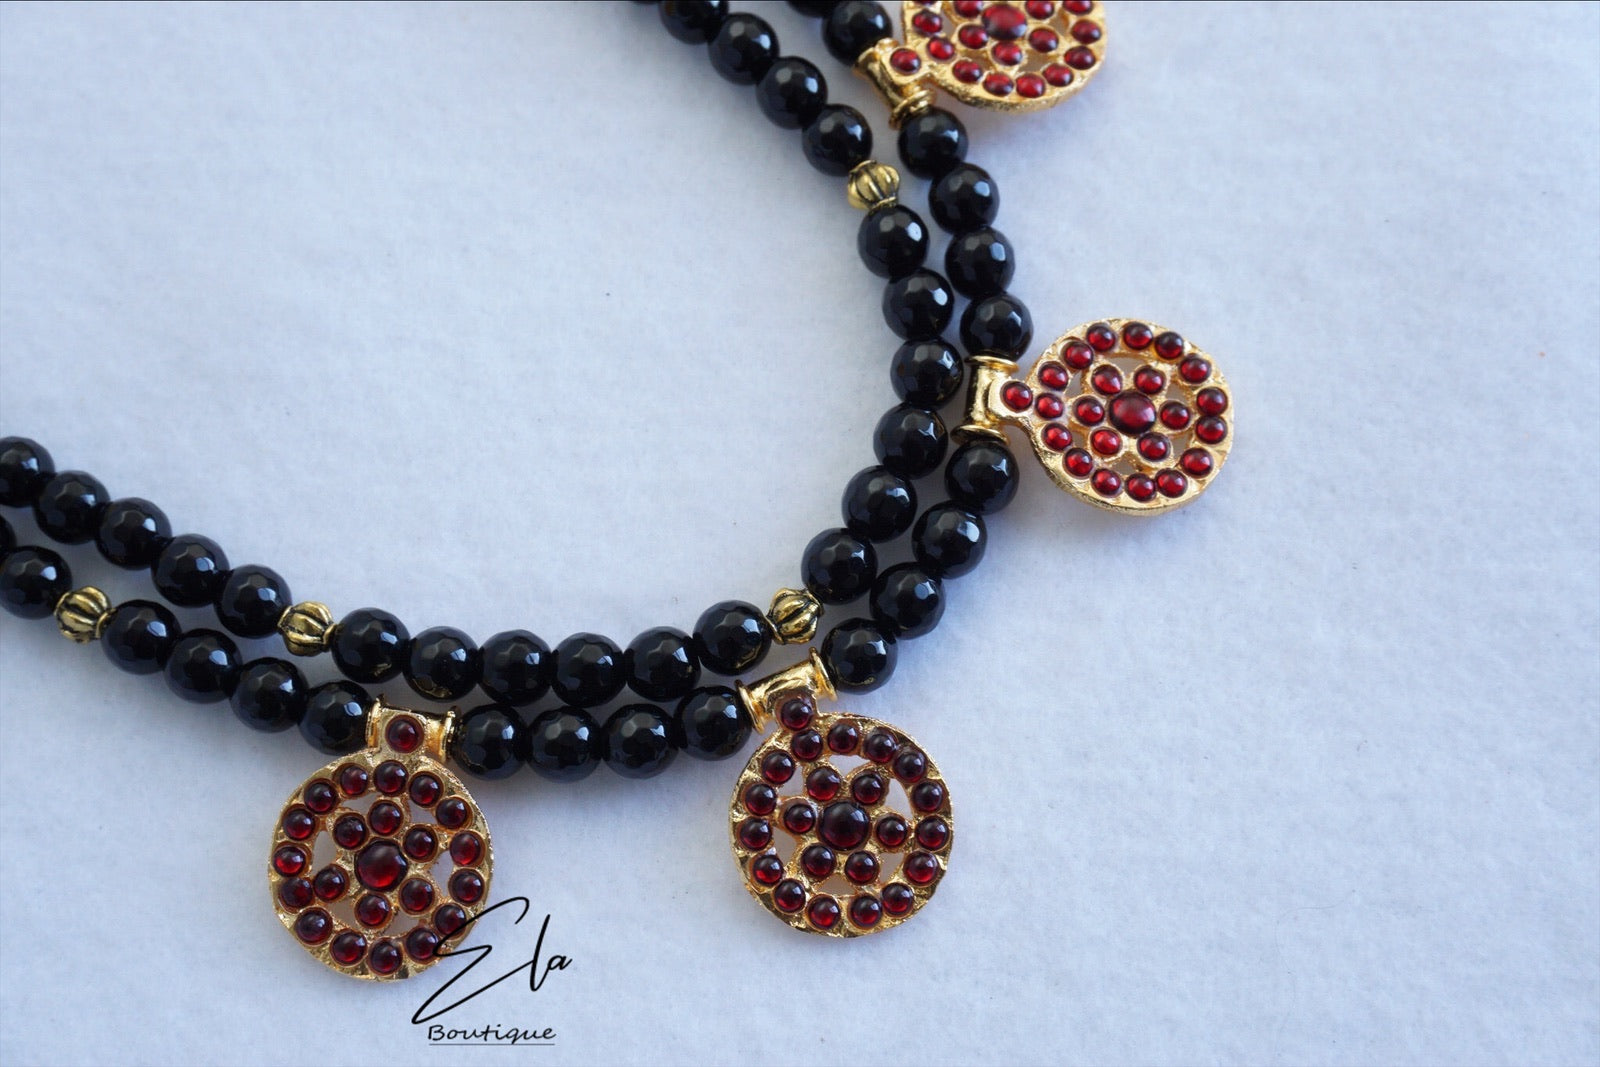 Traditional Kemp Neckwear with Black Beads.